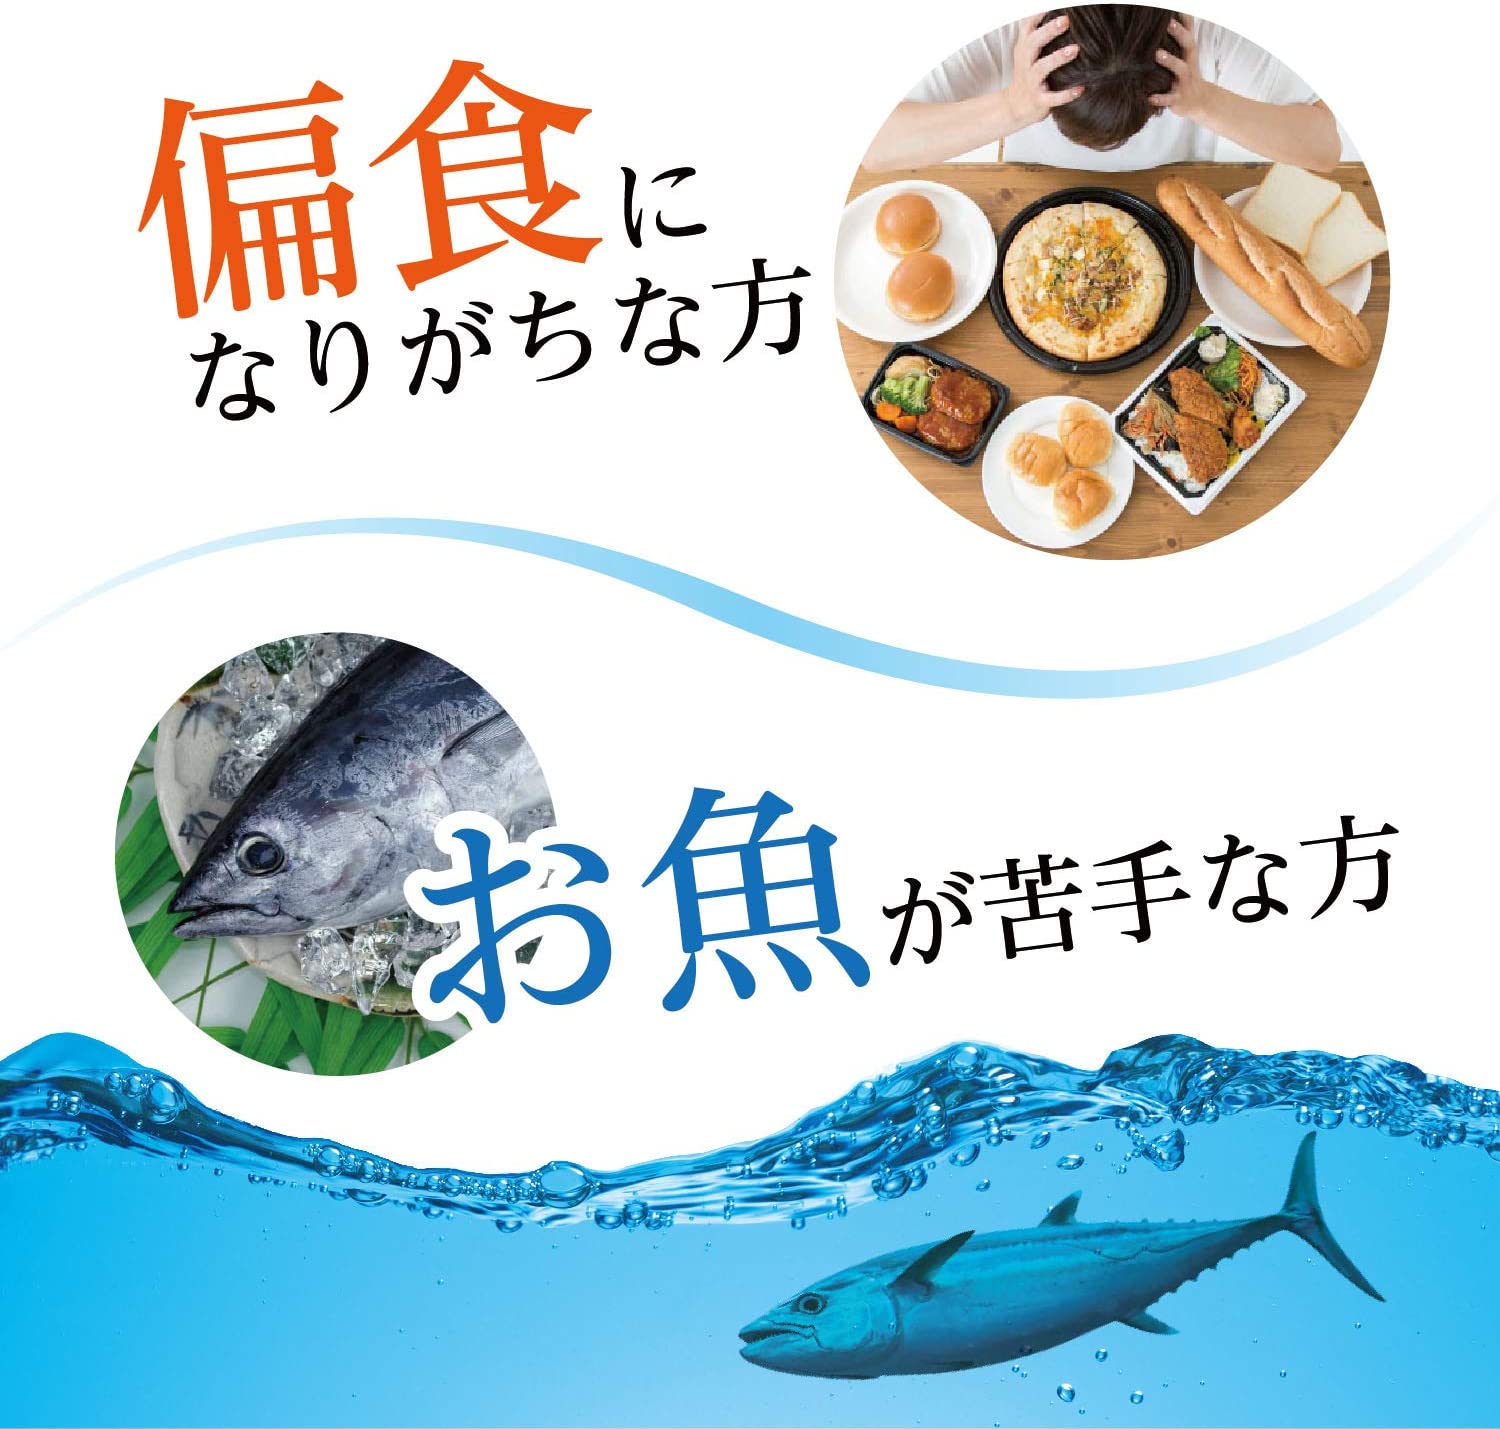 ORIHIRO Omega-3/OMEGA 3 FISH OIL EPA & DHA HEALTH Supplement 180 tablets Japan